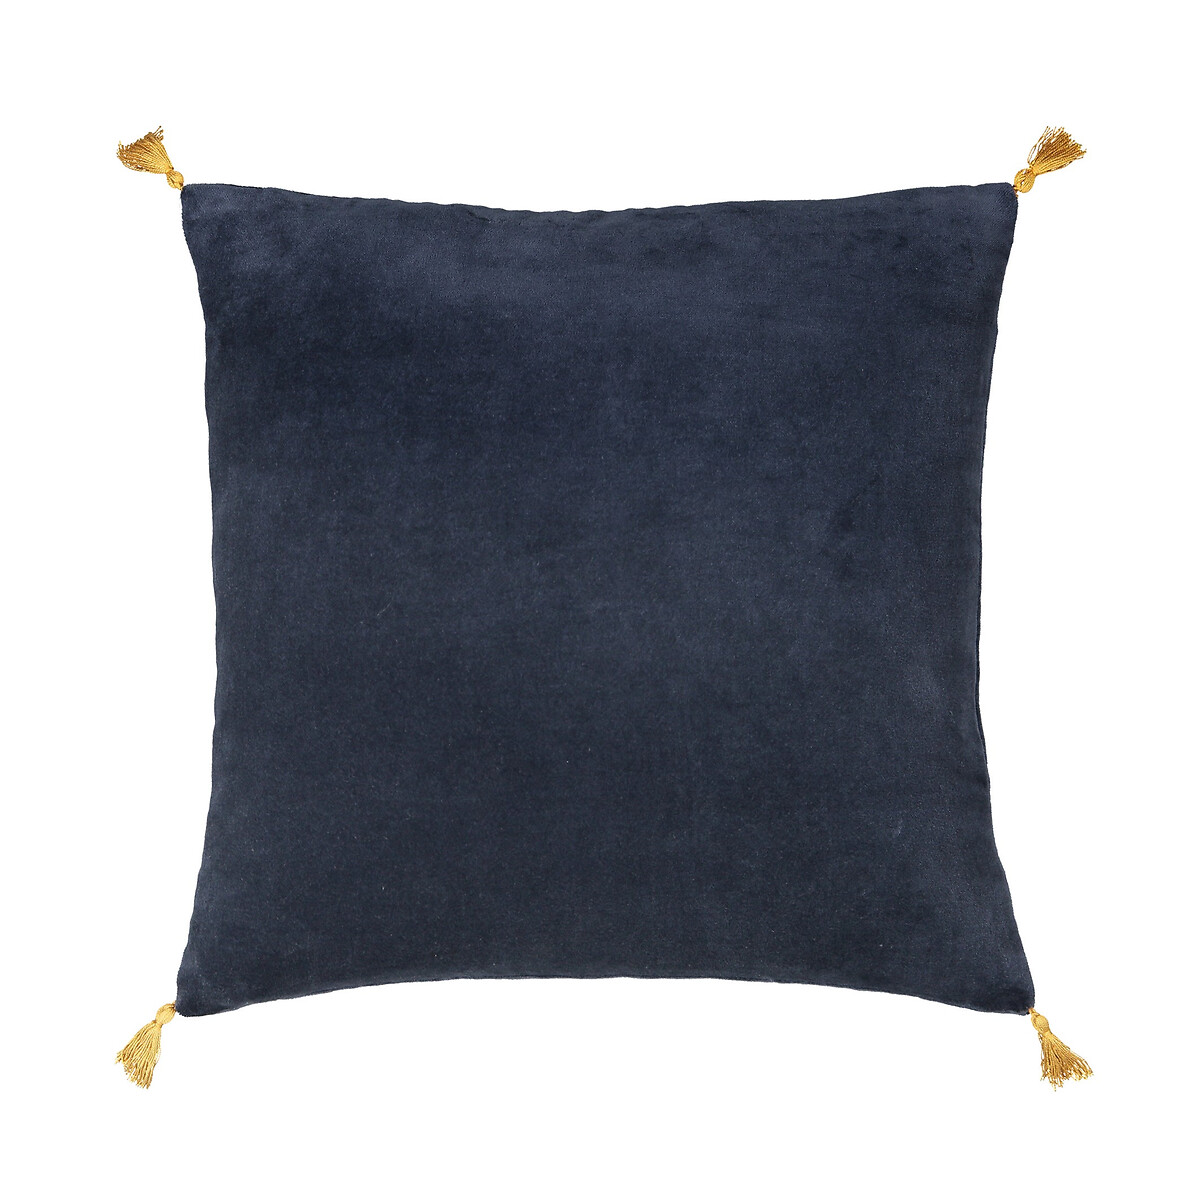 Чехол La Redoute На подушку из велюра Paula 40 x 40 см синий, размер 40 x 40 см - фото 1